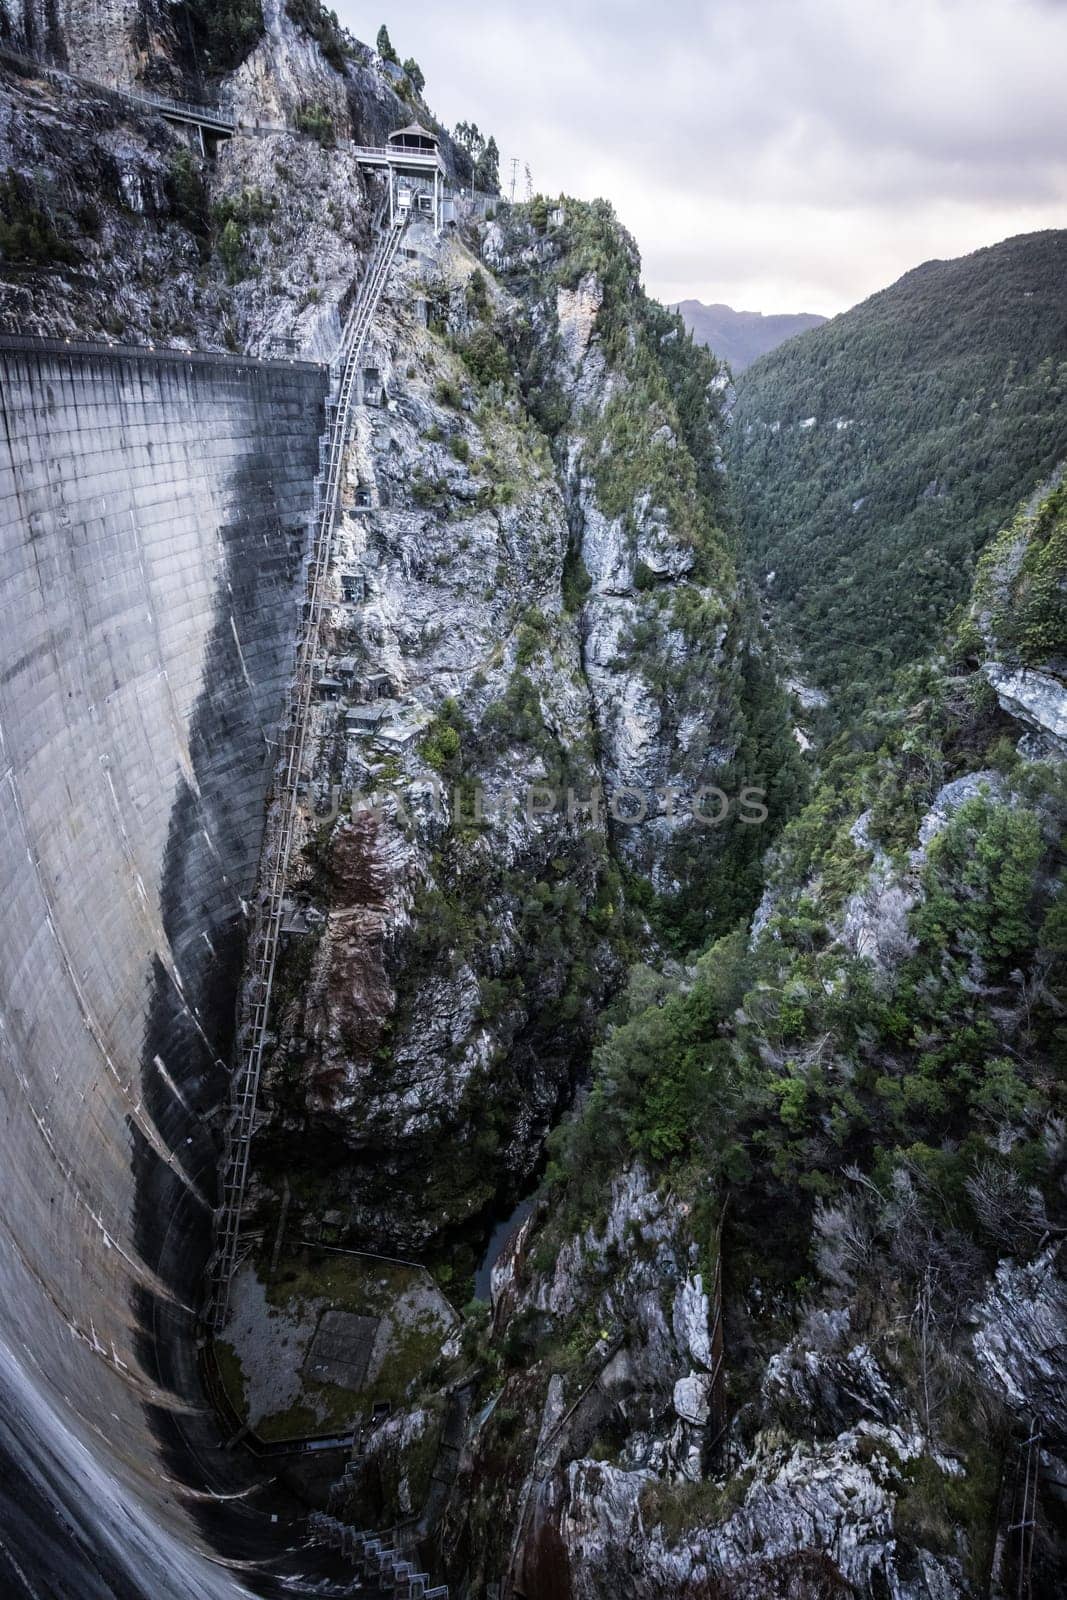 Gordon Dam in Tasmania Australia by FiledIMAGE